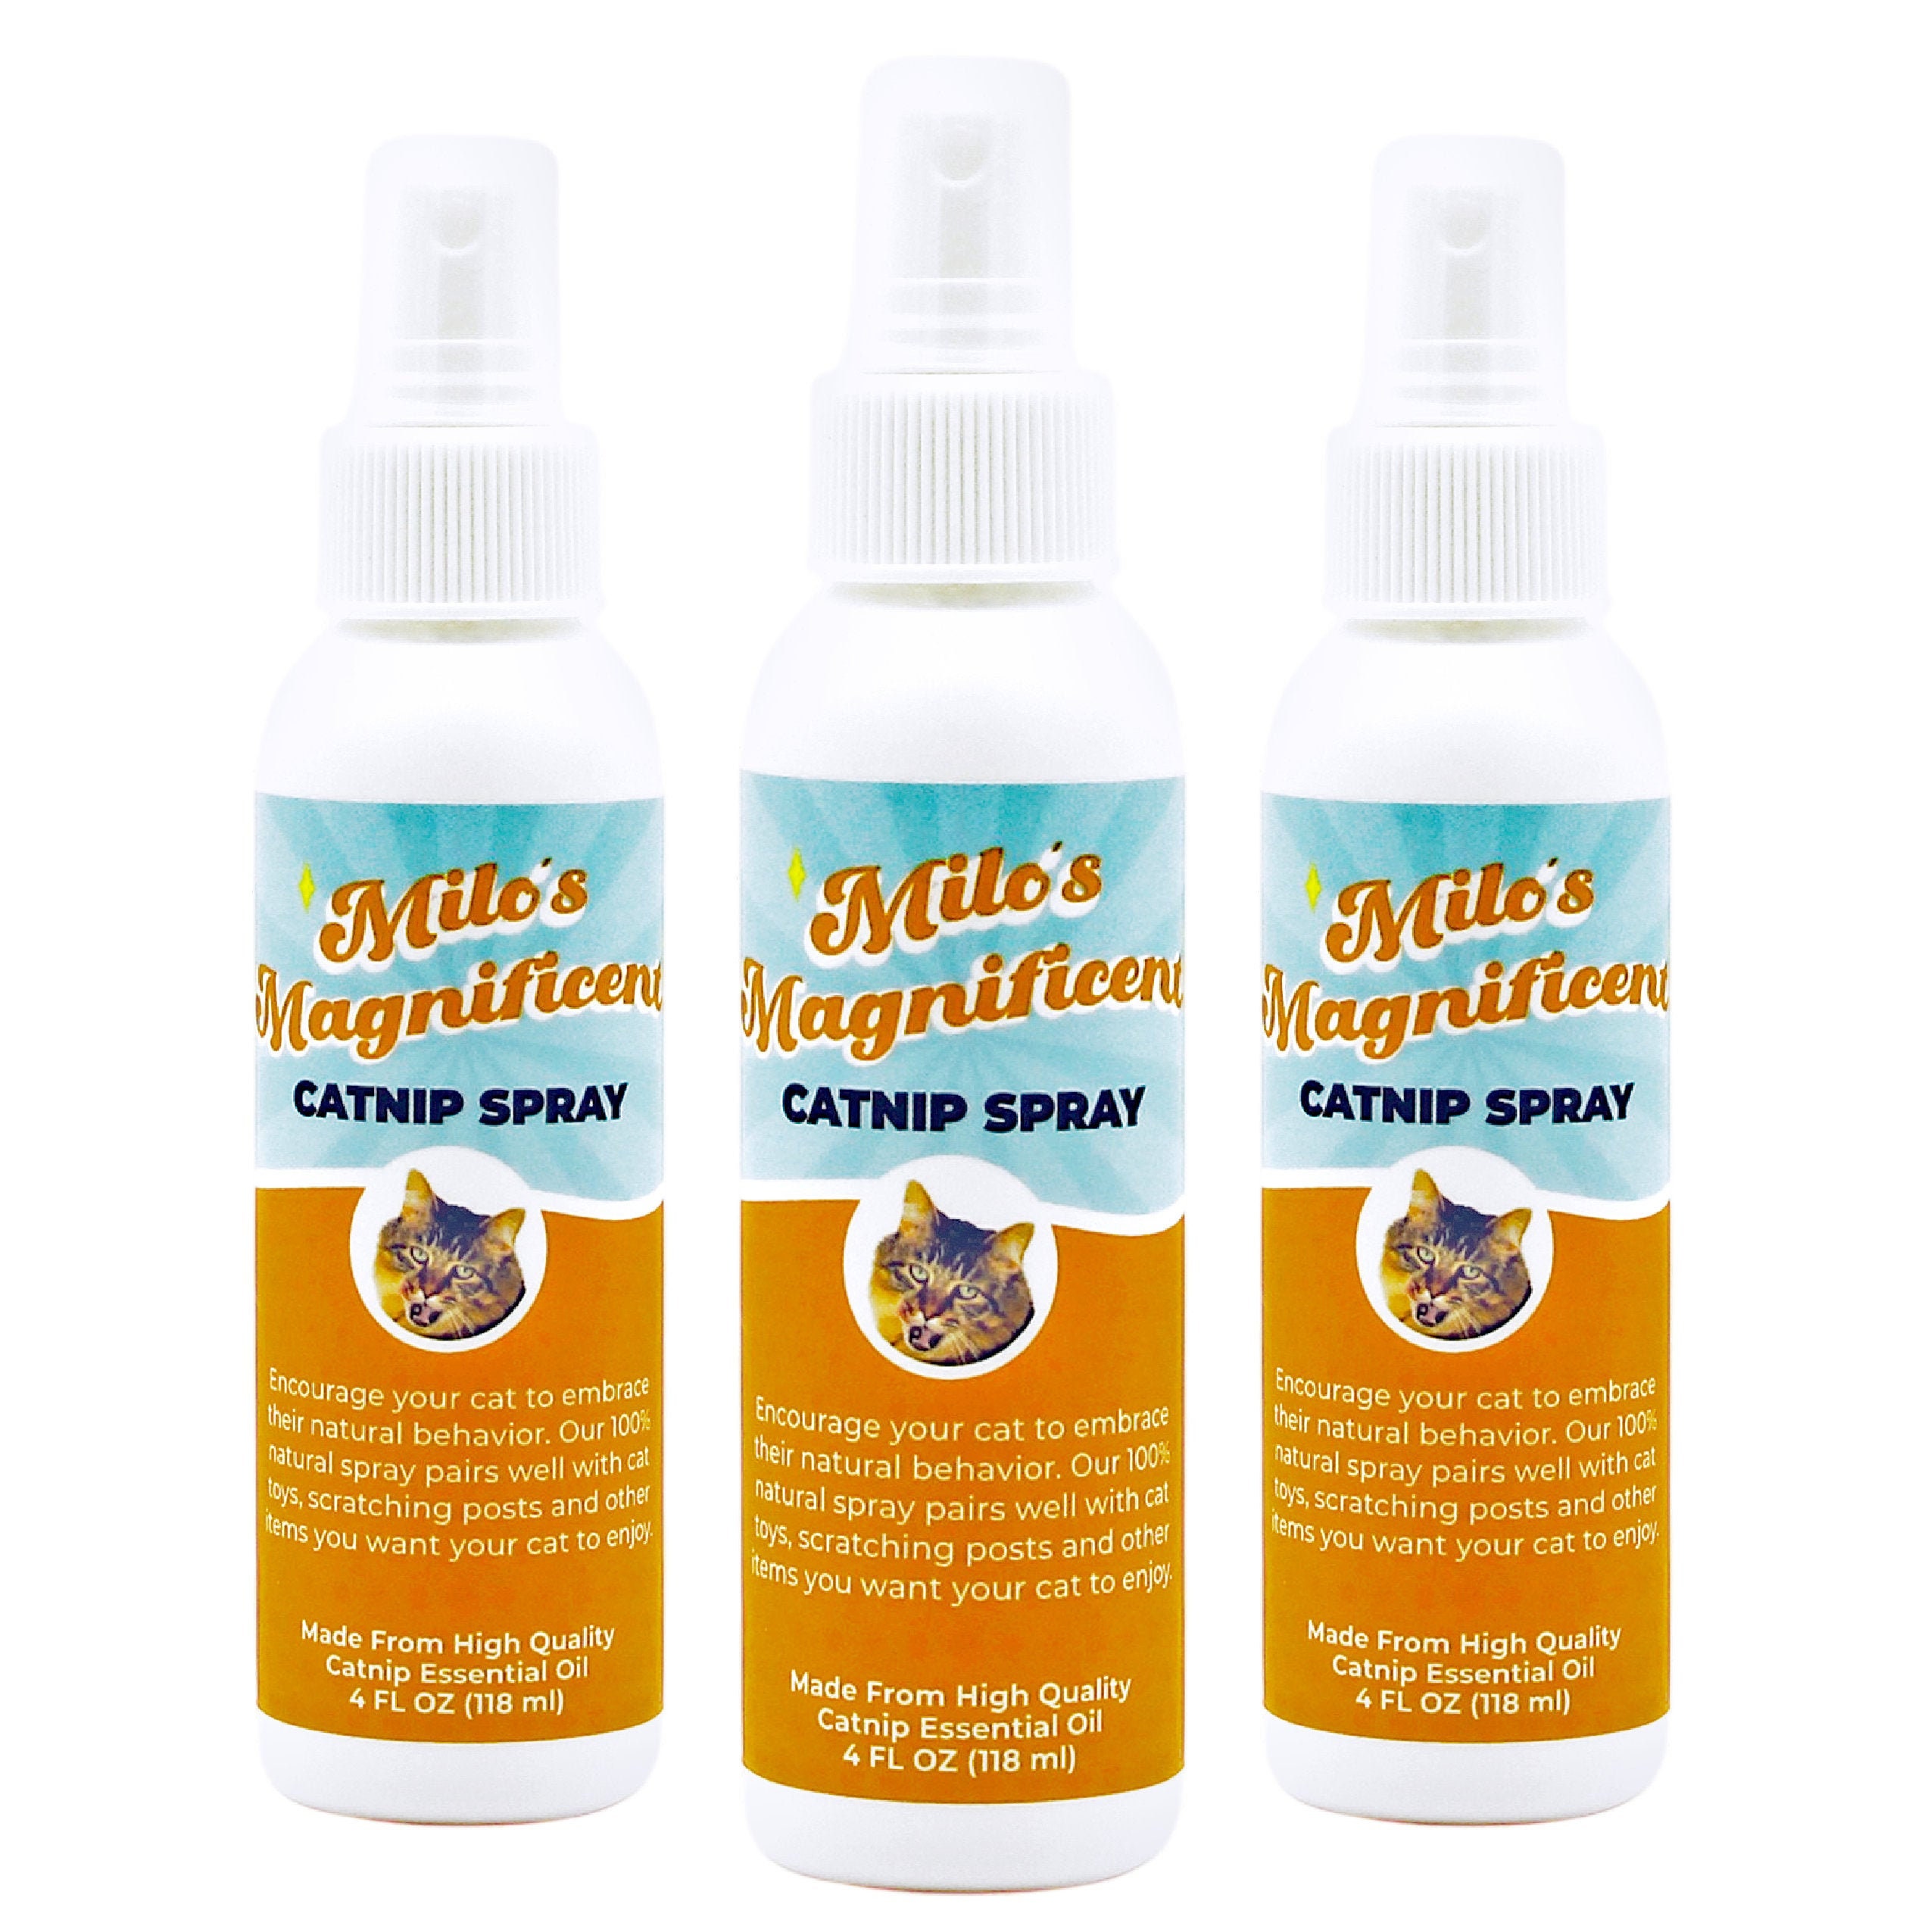 Milo's Magnificent Catnip Spray 4 Oz. 3 Pack 